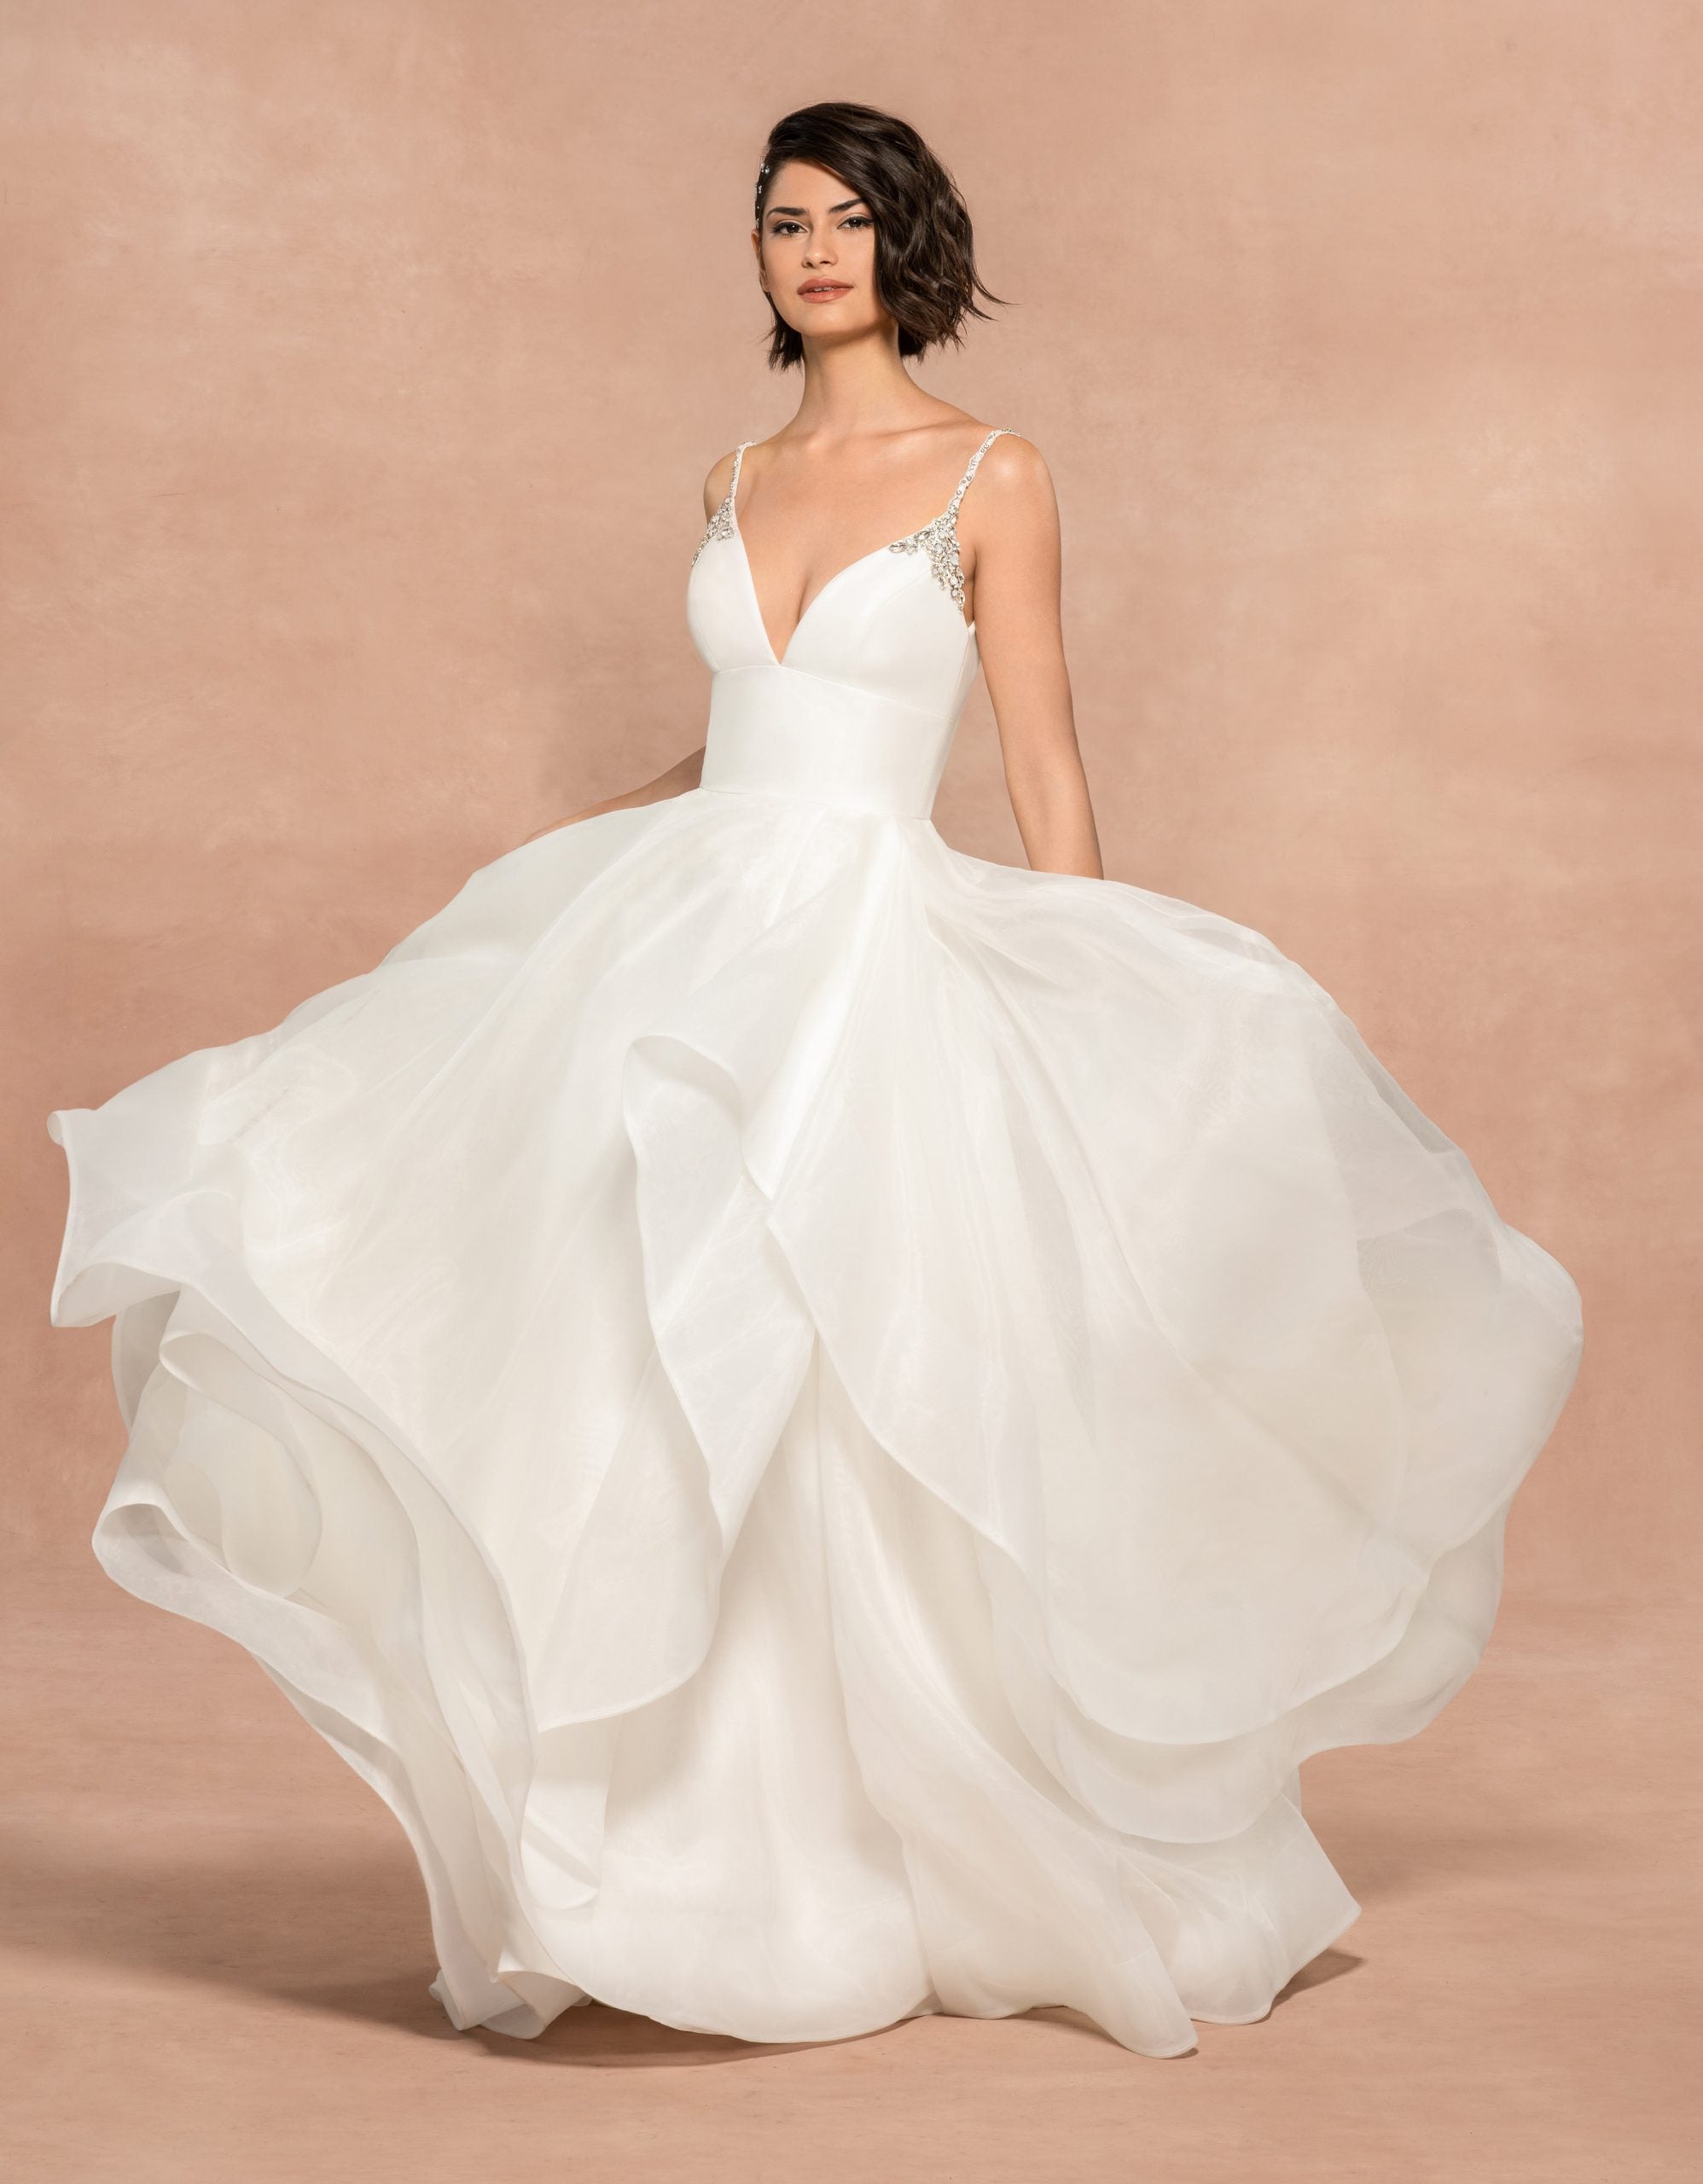 organza ball gown wedding dress